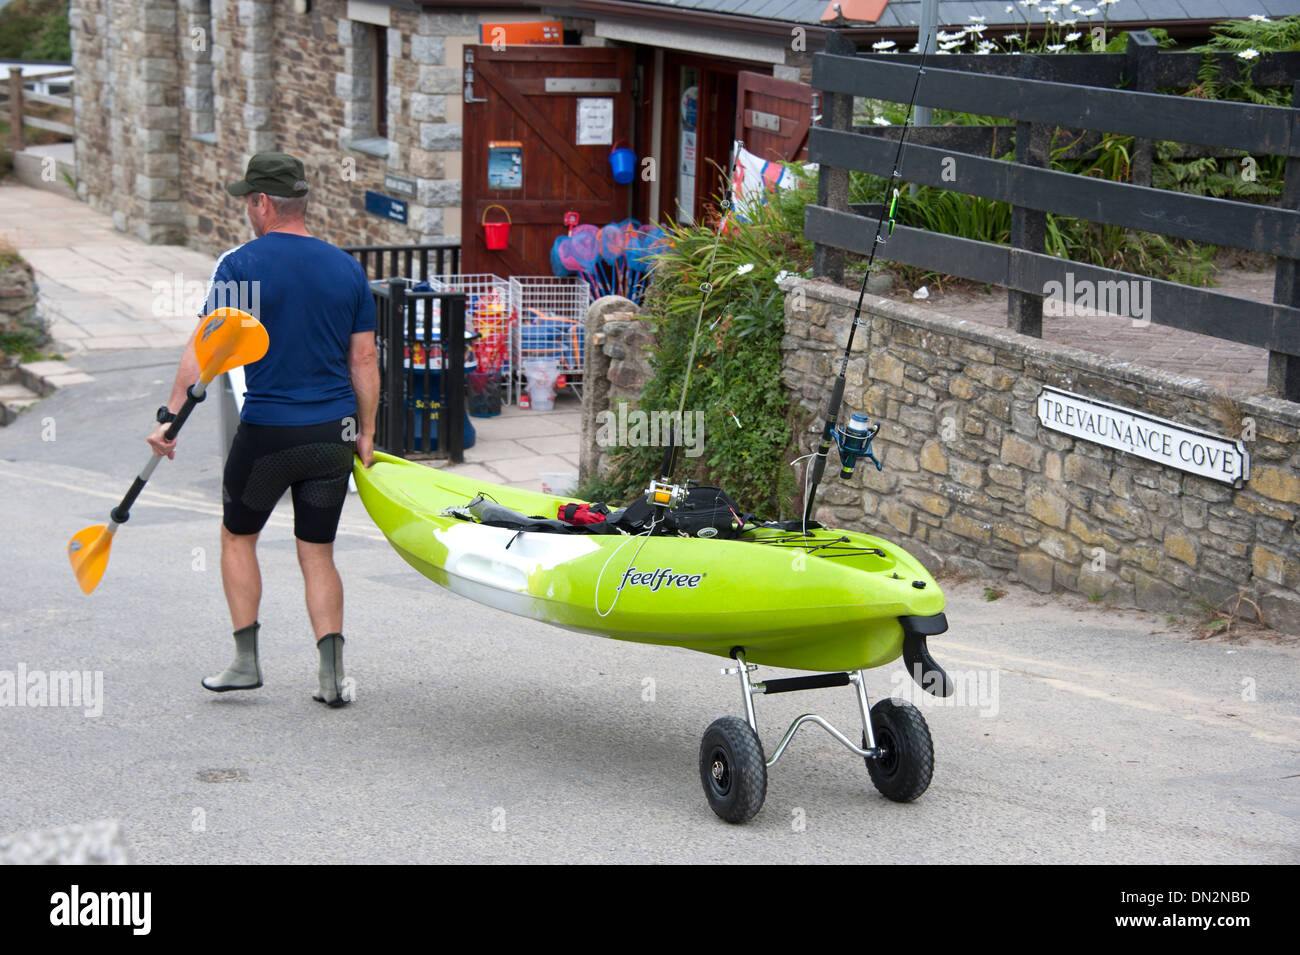 Man wheeling Kayak Fishing Trevaunance Cove Cornwall Stock Photo